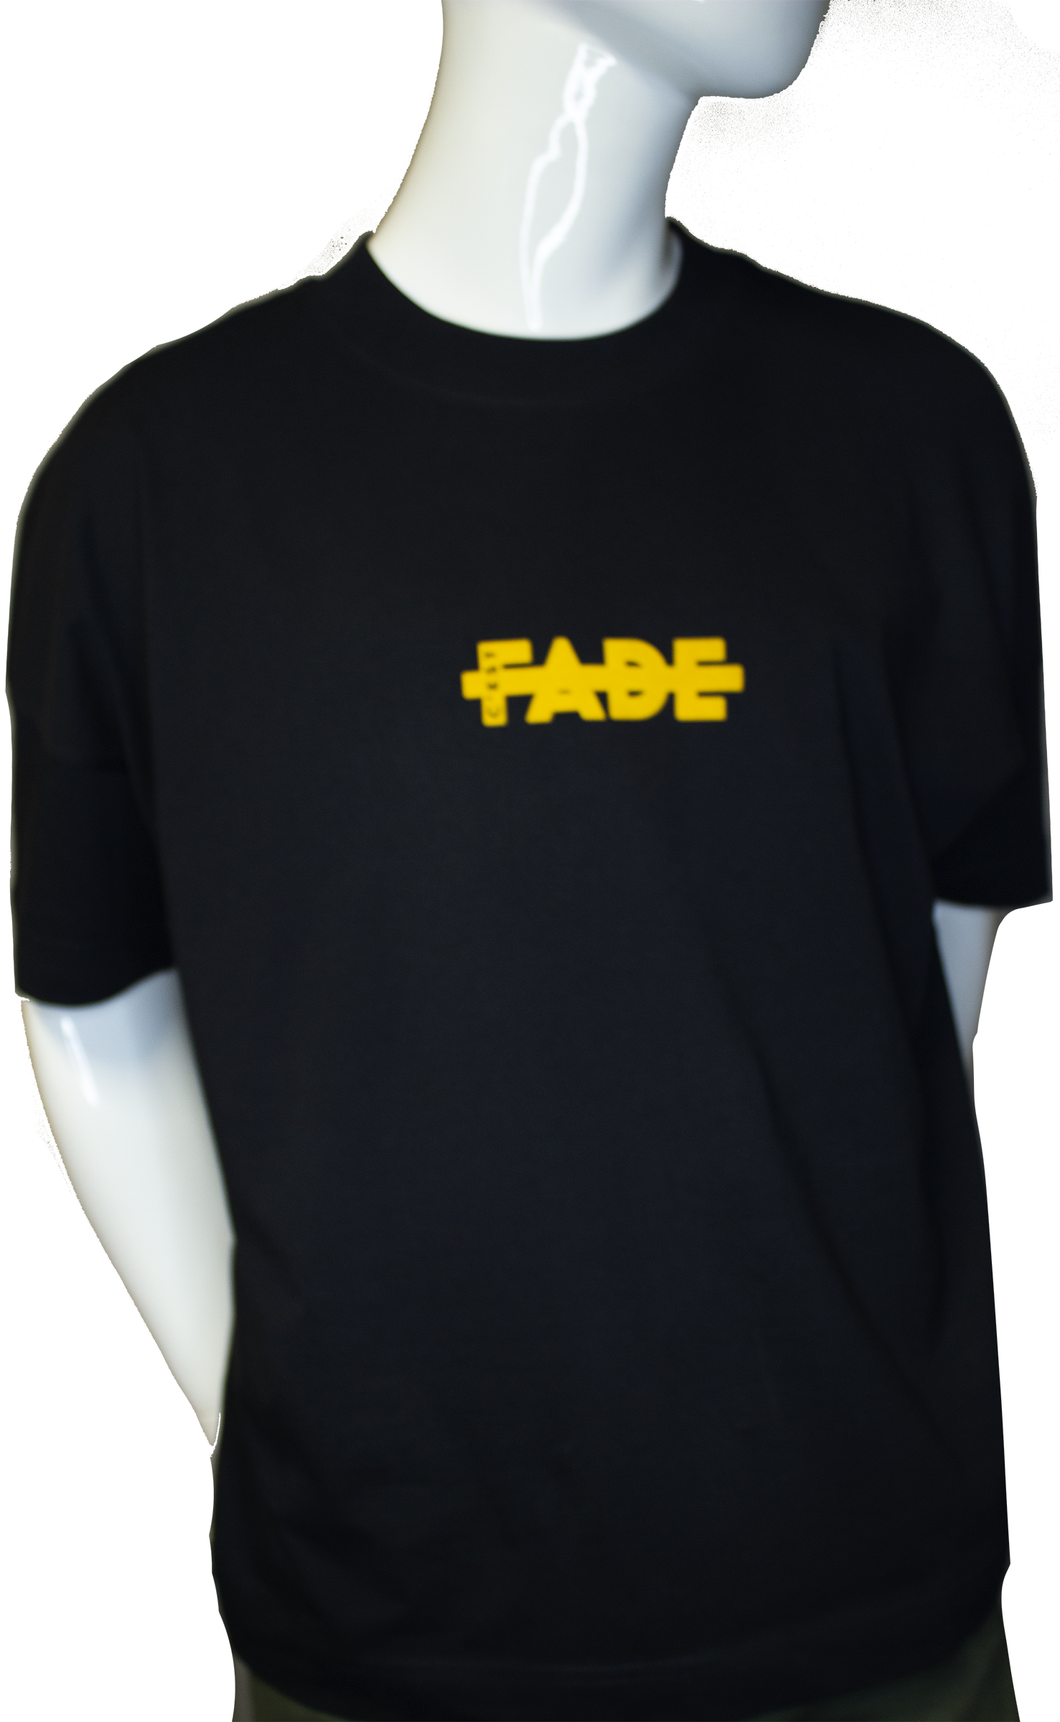 Cestfade small logo print on Black oversized T-shirt yellow print